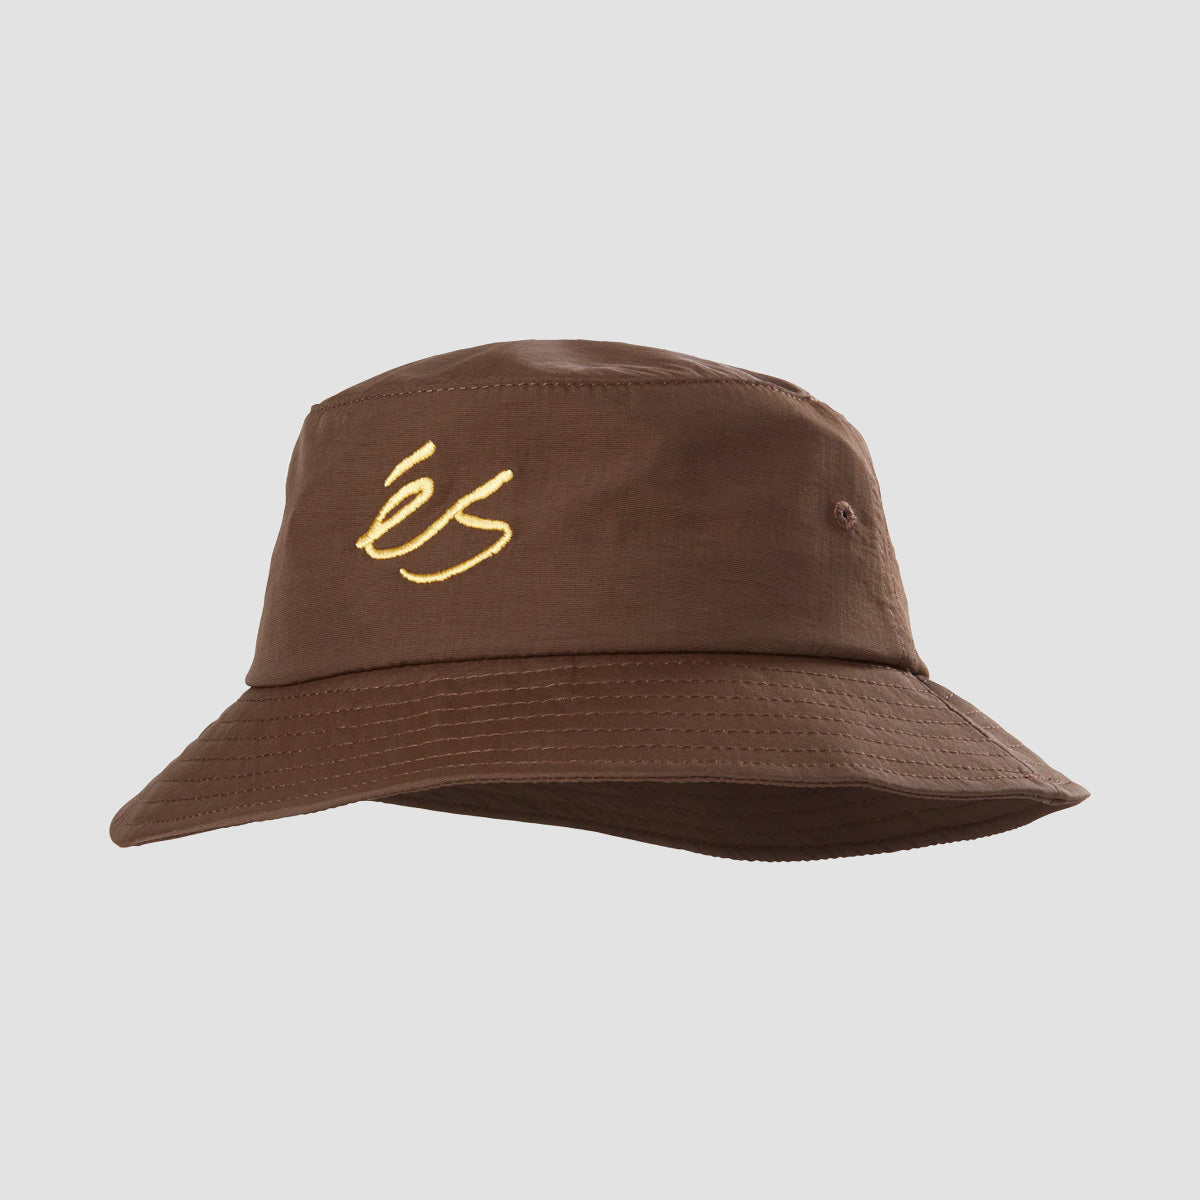 eS Bucket Hat Brown